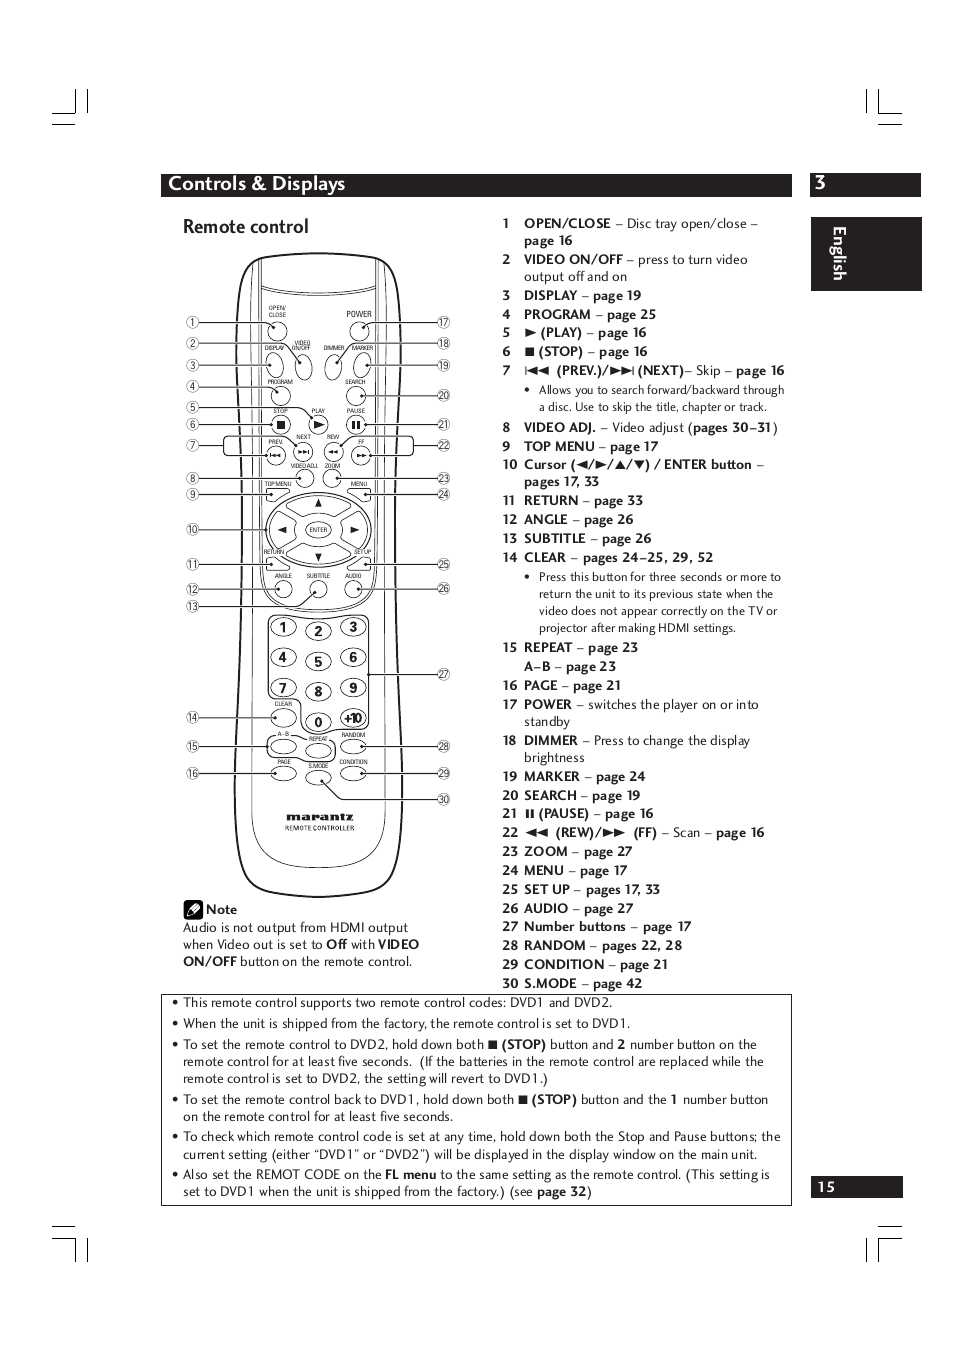 3controls & displays, Remote control, English | Marantz DV9600 User Manual | Page 15 / 68